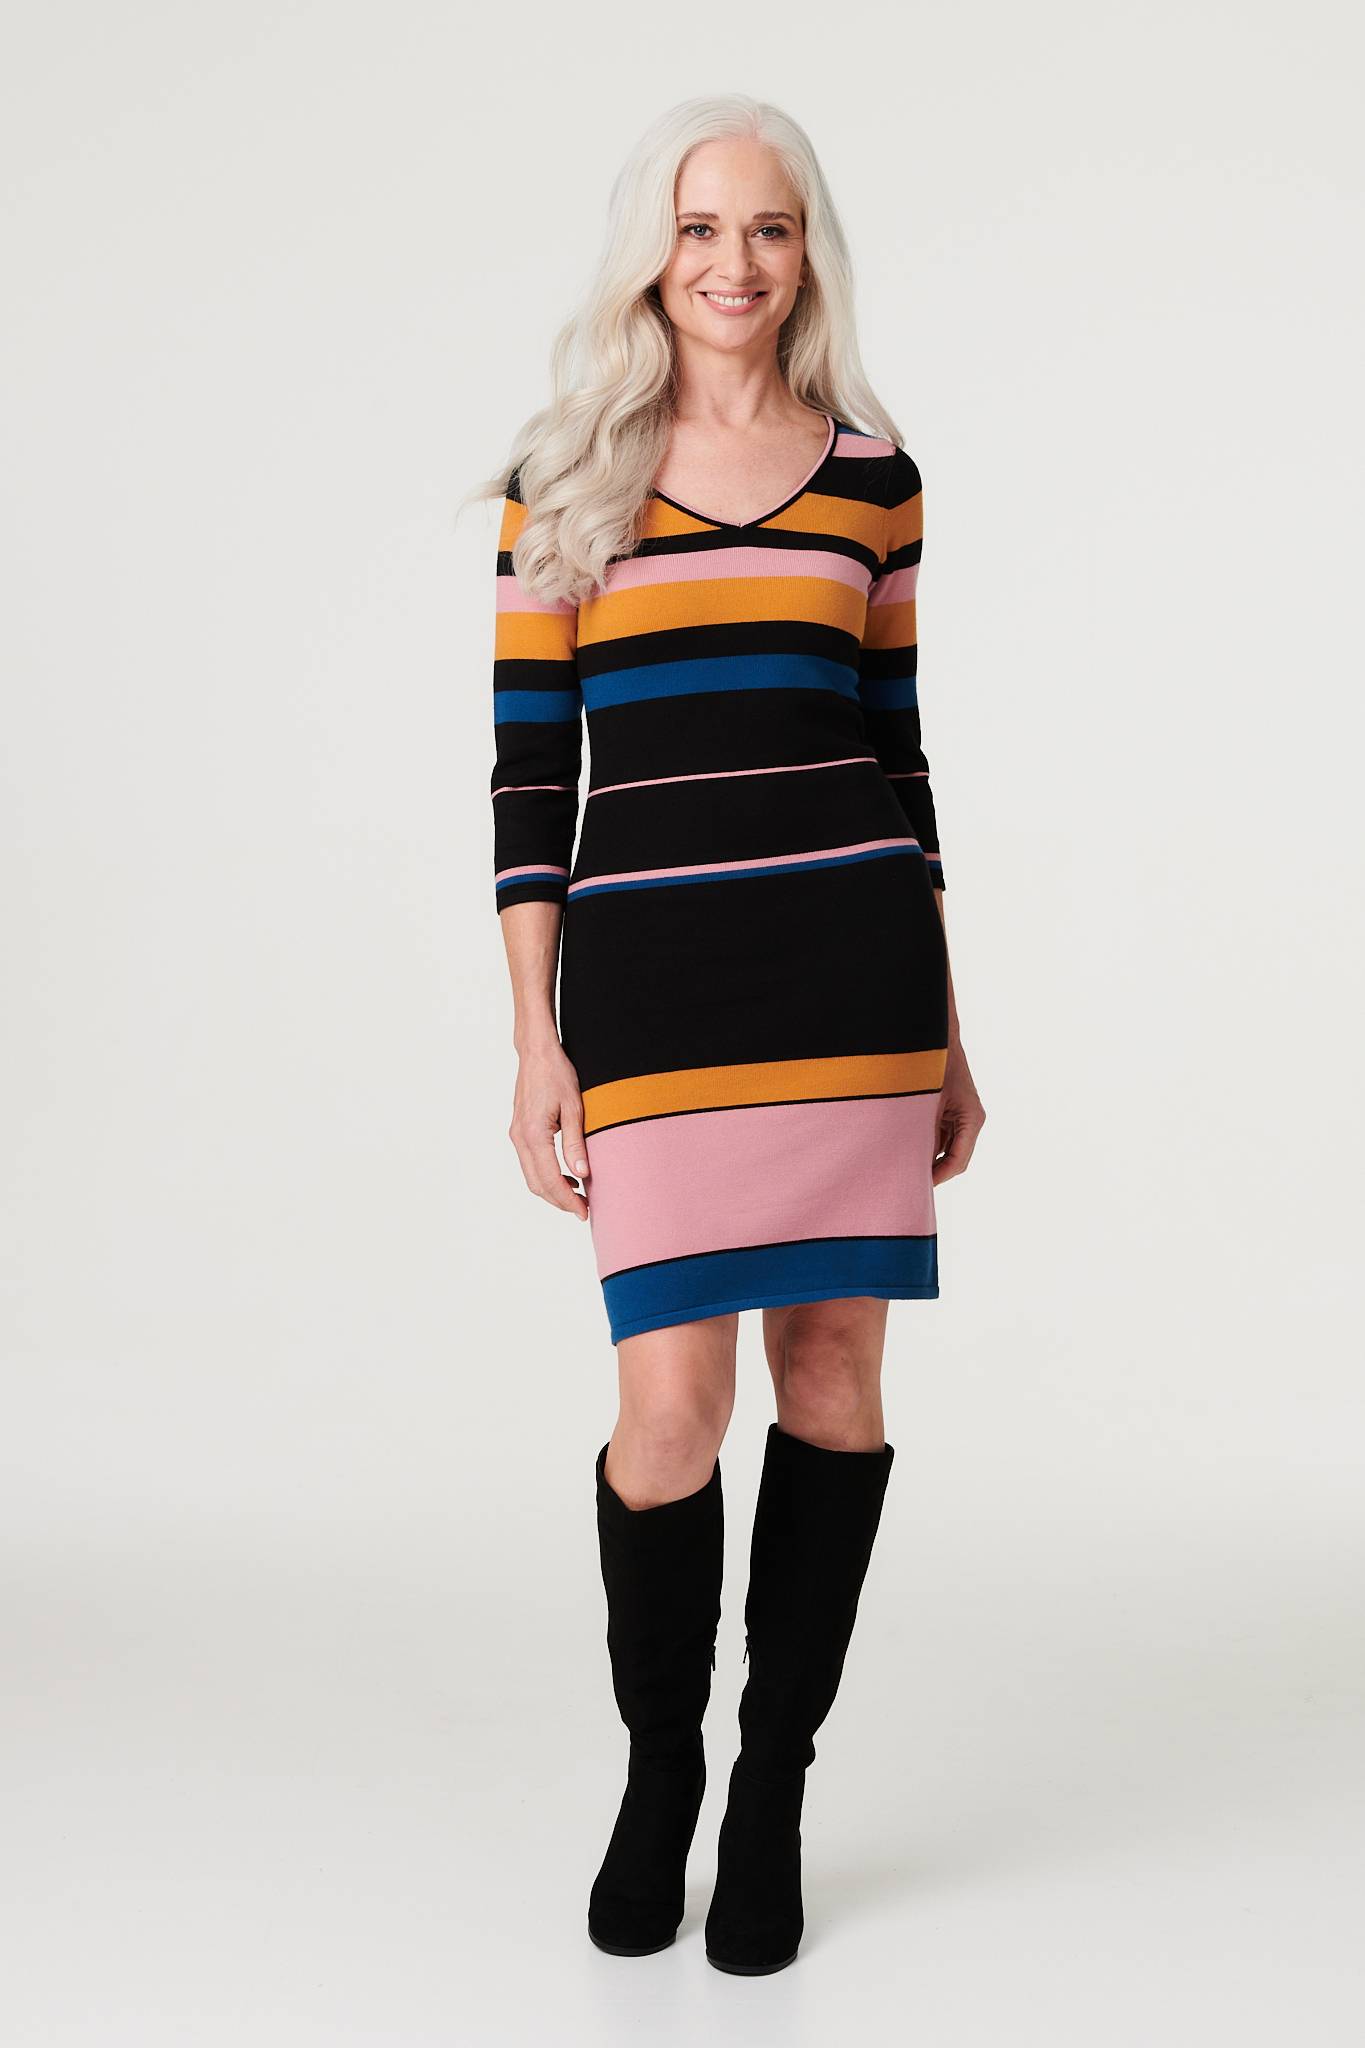 Black | Striped 3/4 Sleeve Knit Dress : Model is 5'8.5"/174 cm and wears UK8/EU36/US4/AUS8